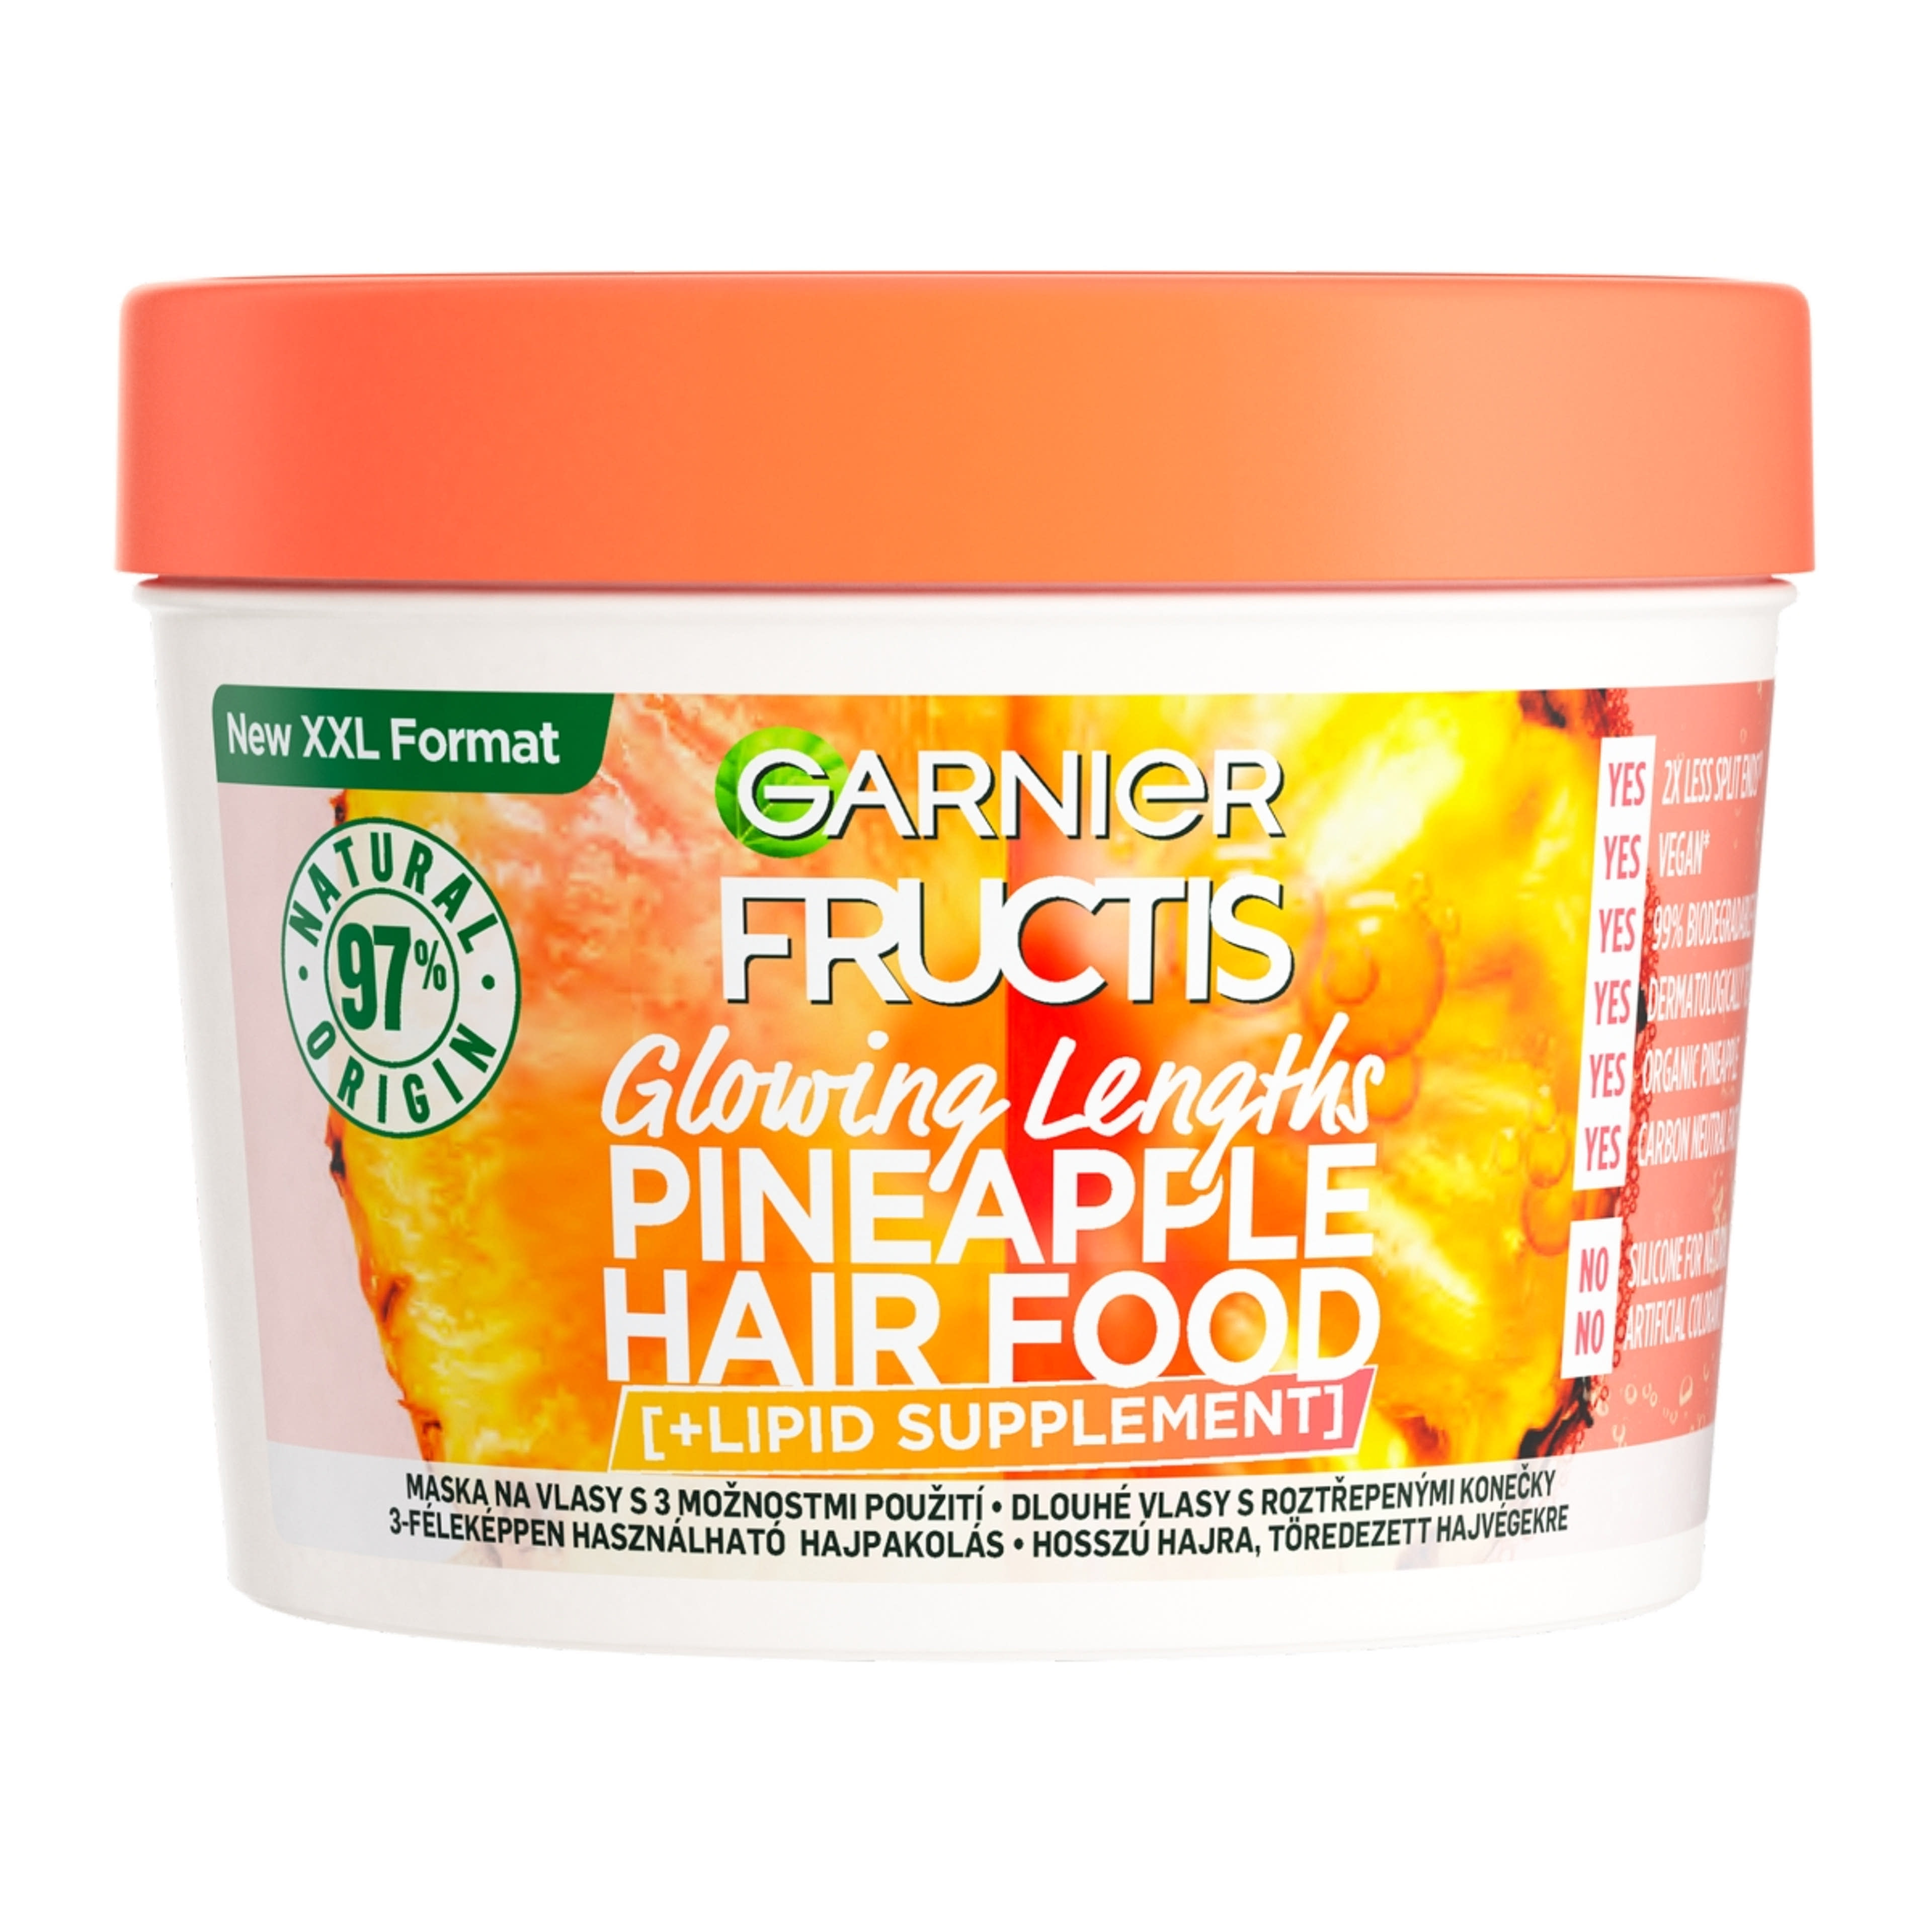 Garnier Fructis Hair Food Pineapple hajpakolás - 400 ml